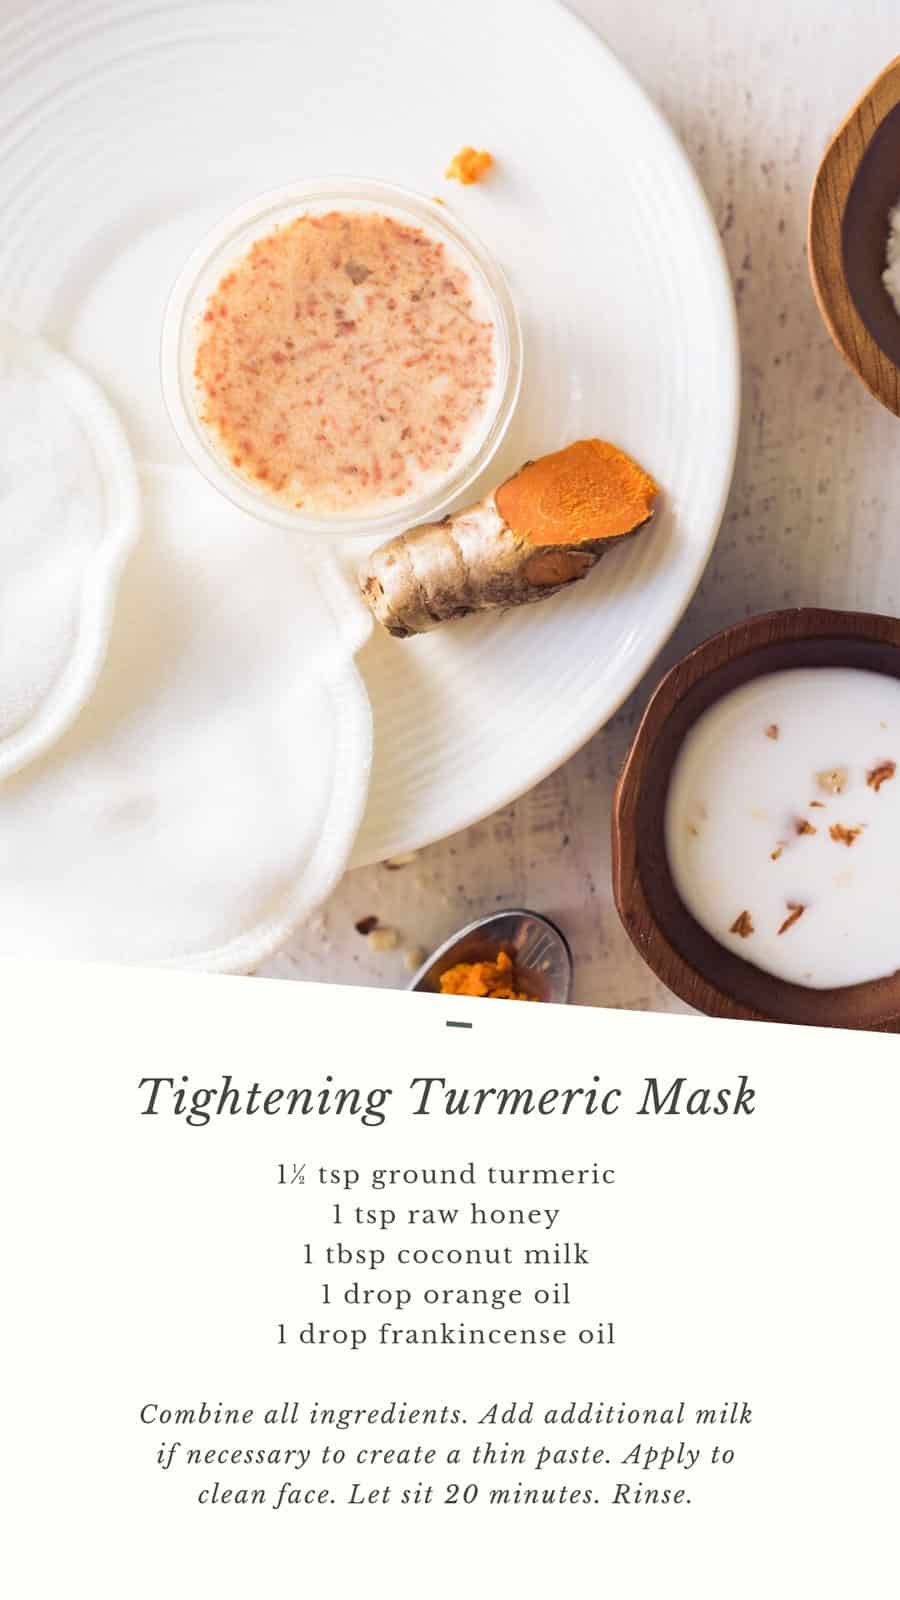 Tightening turmeric mask - use turmeric to fight aging